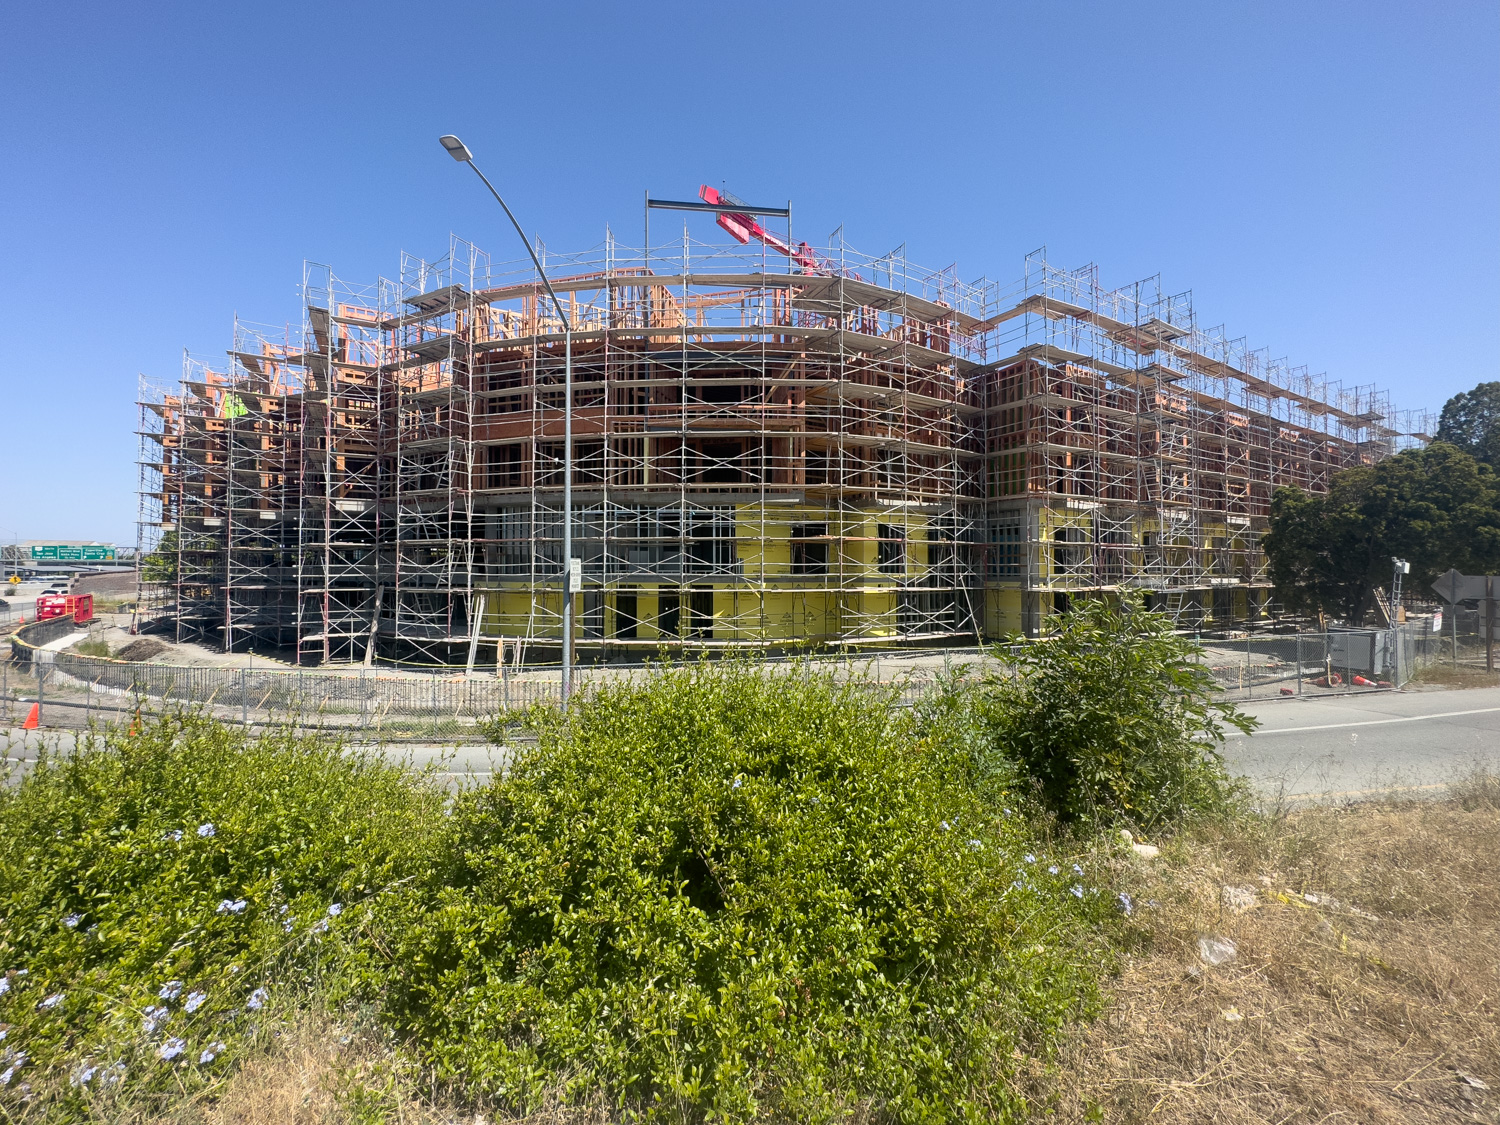 Residences @ Shoreline Gateway construction update, image by author